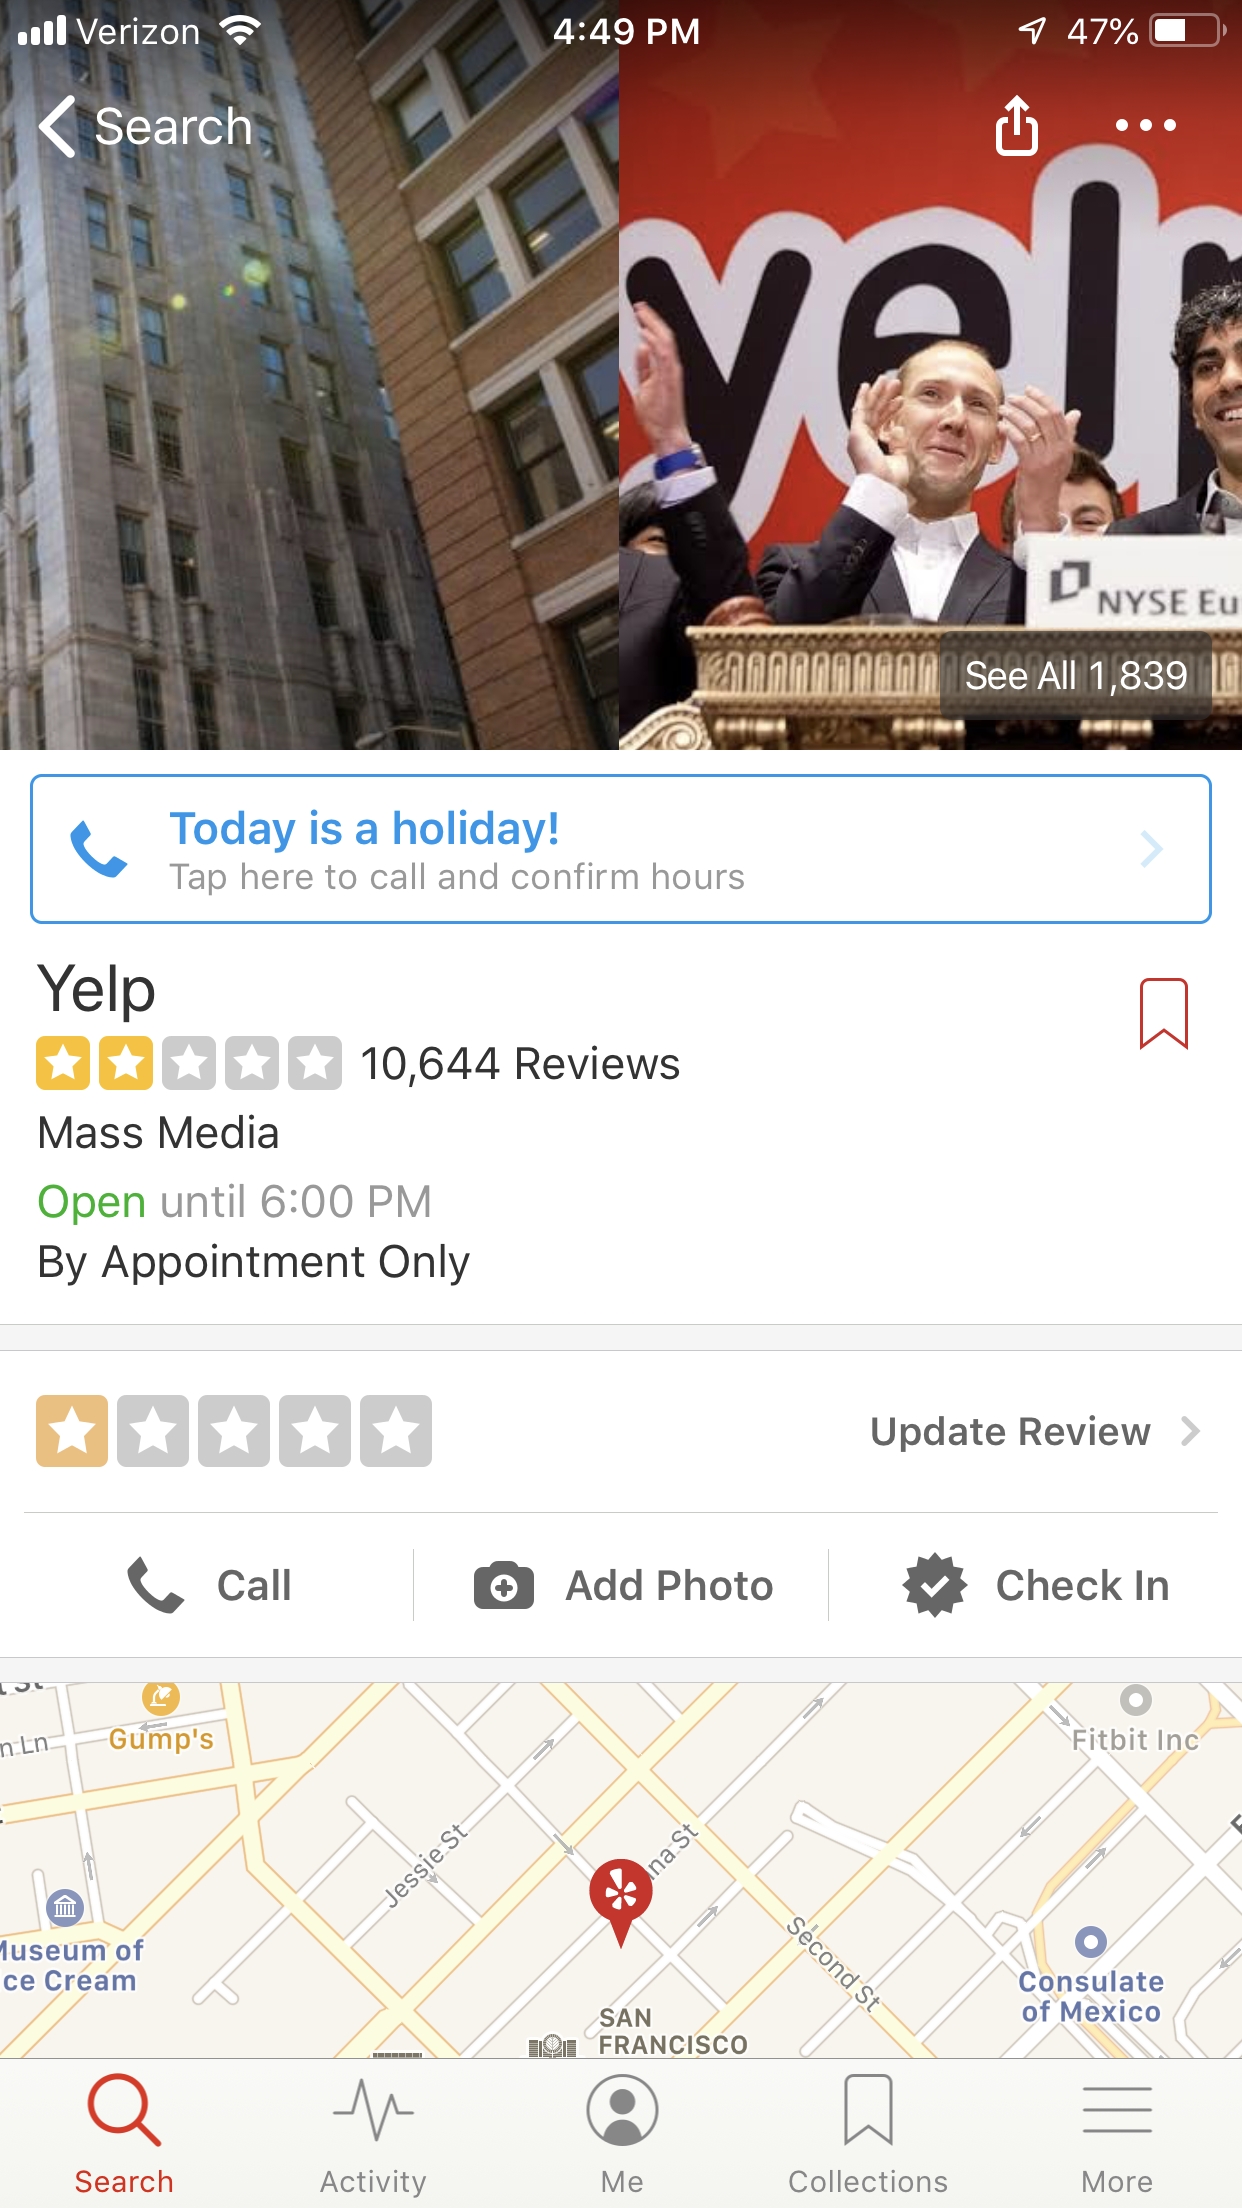 Yelp Reviews - 779 Reviews of Yelp.com | Sitejabber